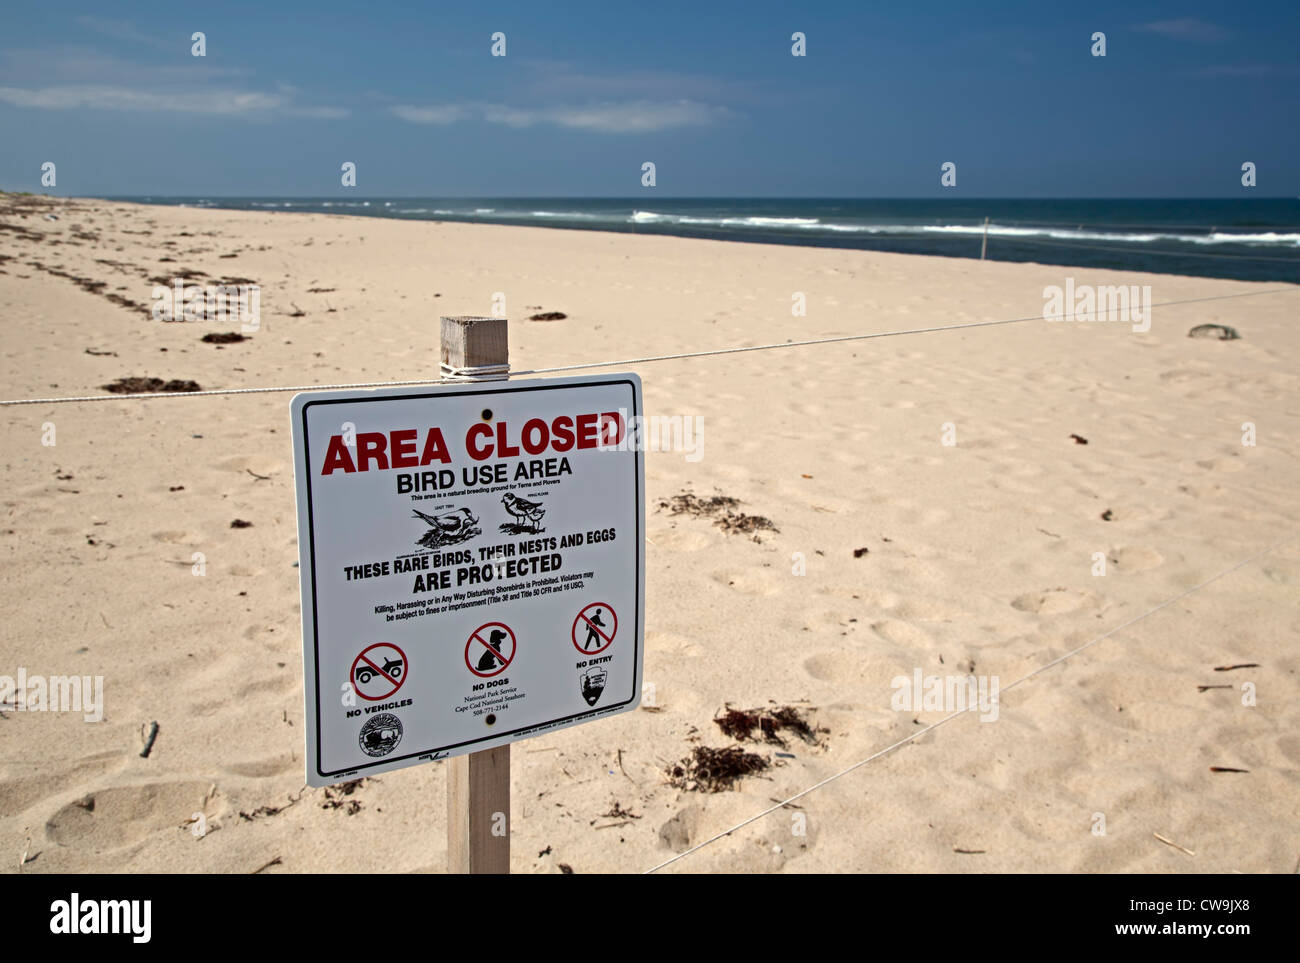 Cape Cod beach closed to provide protection for rare nesting birds. Stock Photo